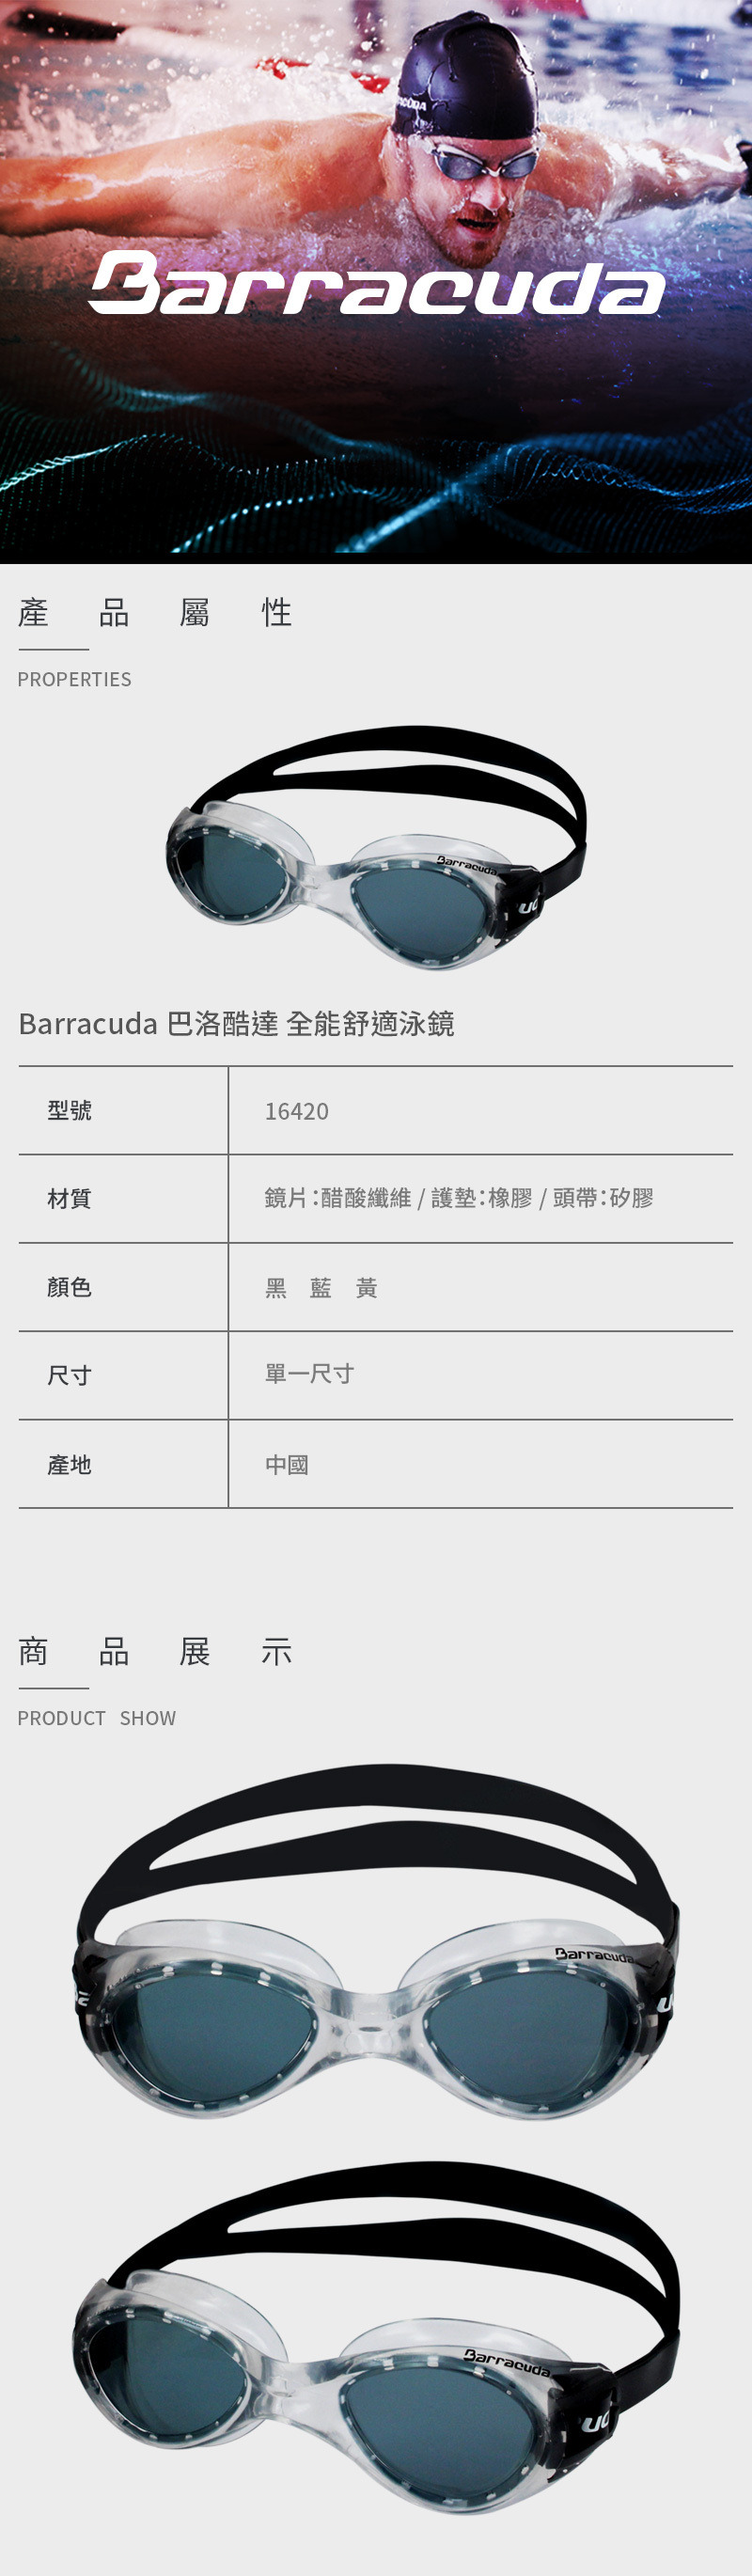 【Barracuda 巴洛酷達】專業訓練泳鏡 16420